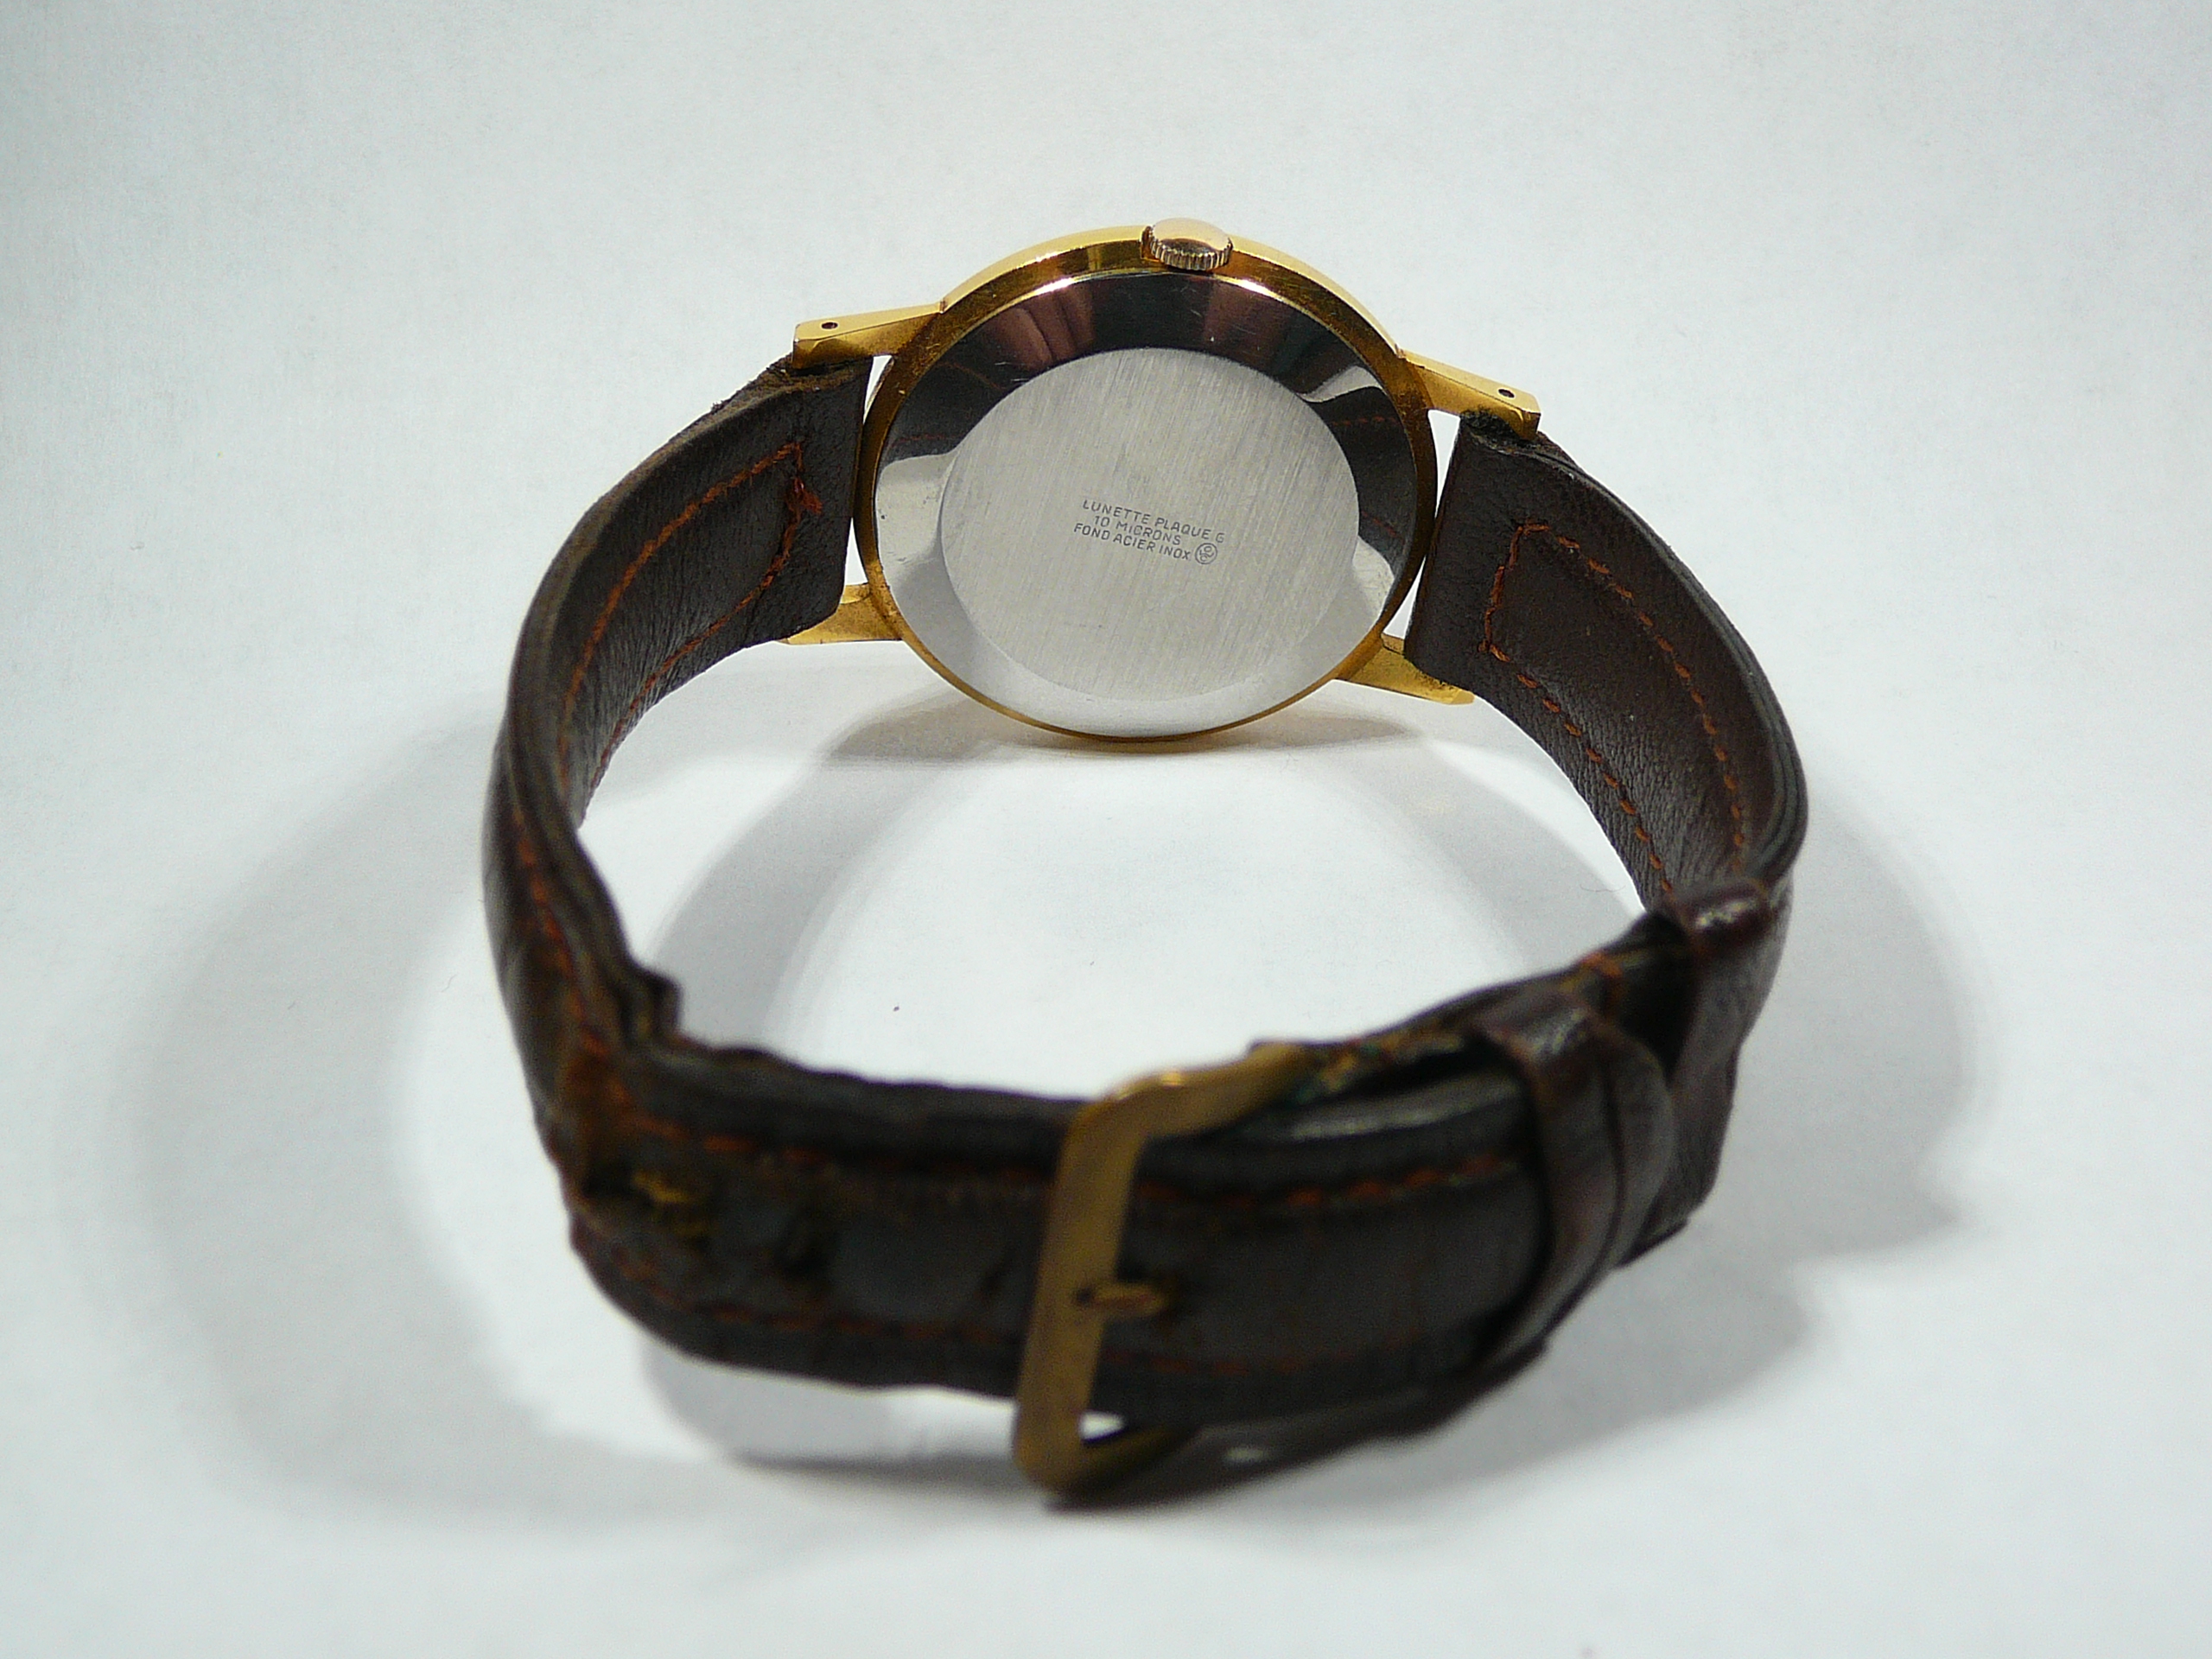 Gents Vintage Oris Wrist Watch - Image 3 of 3